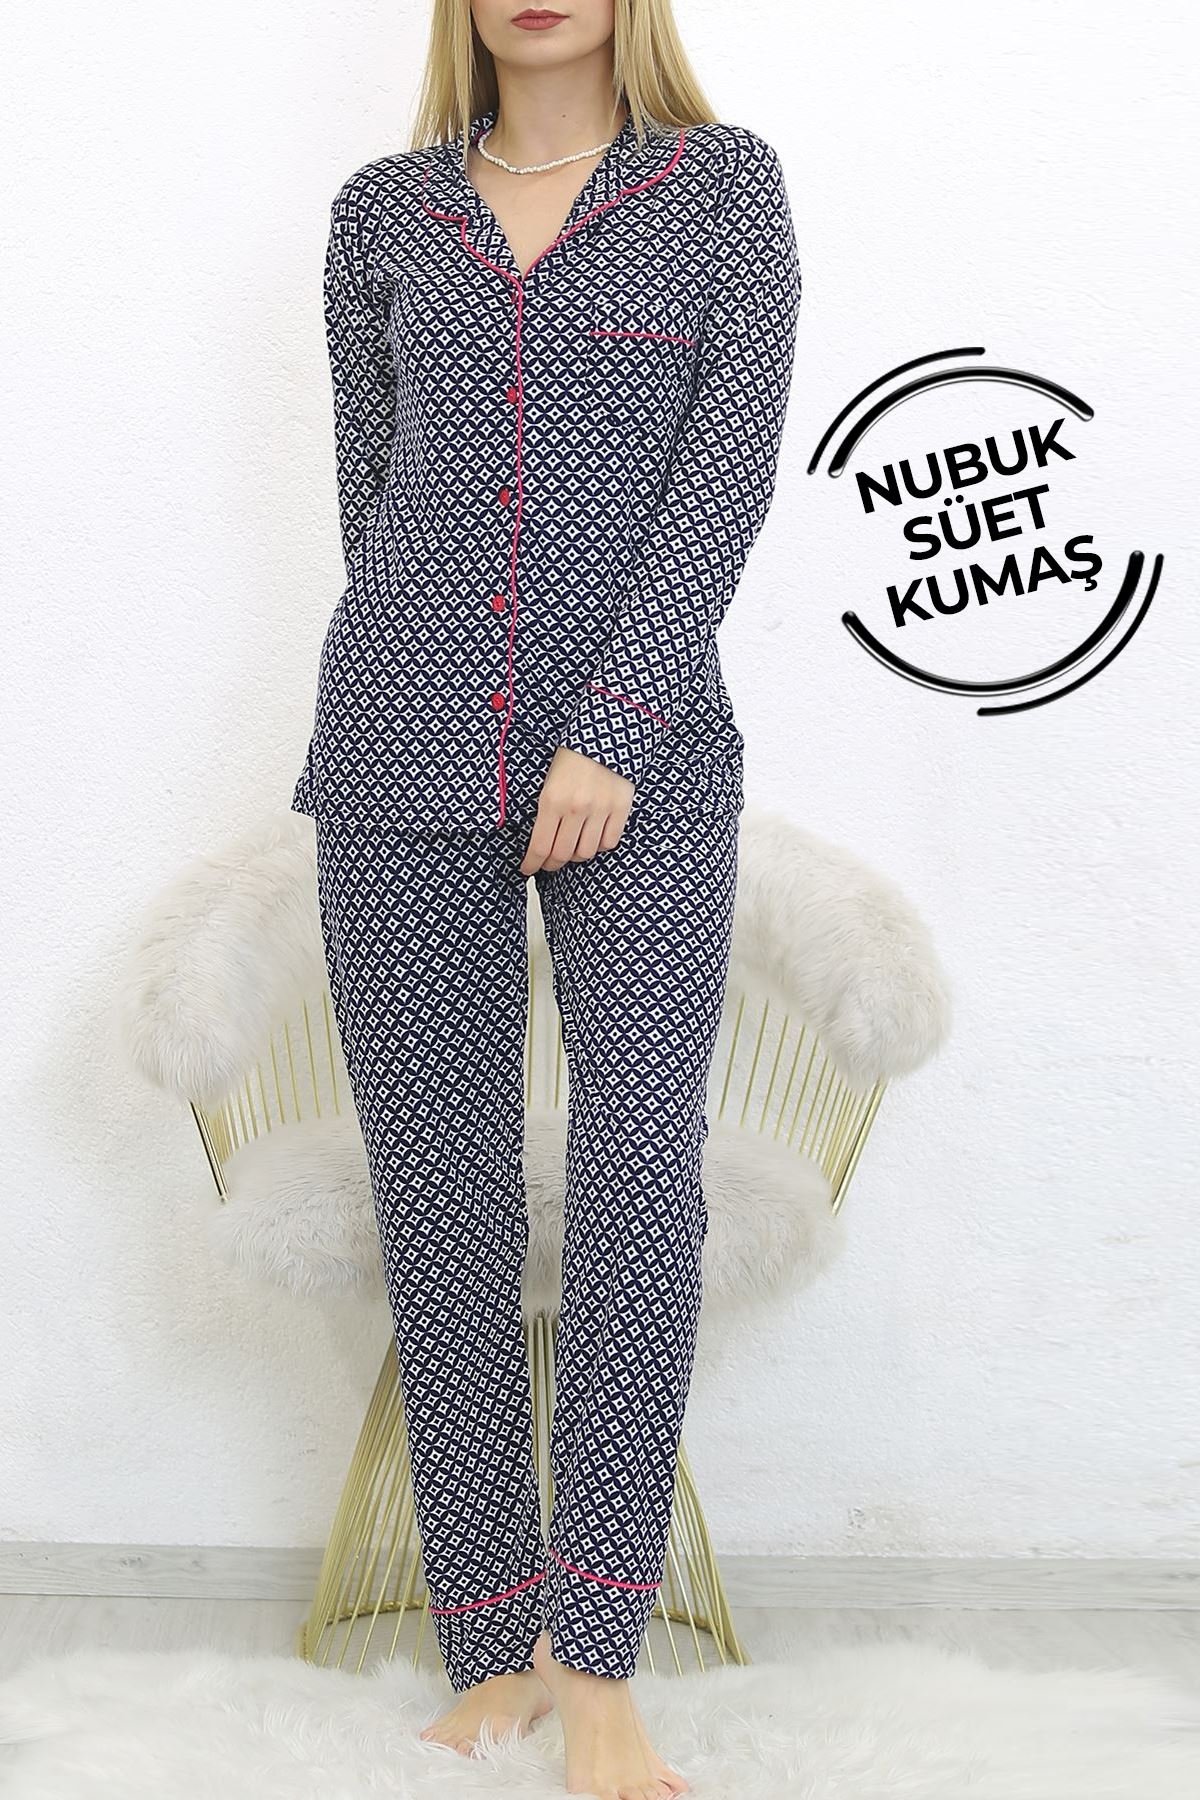 Nubuk Süet Pijama Takımı Lacifuşya - 8529.1048.